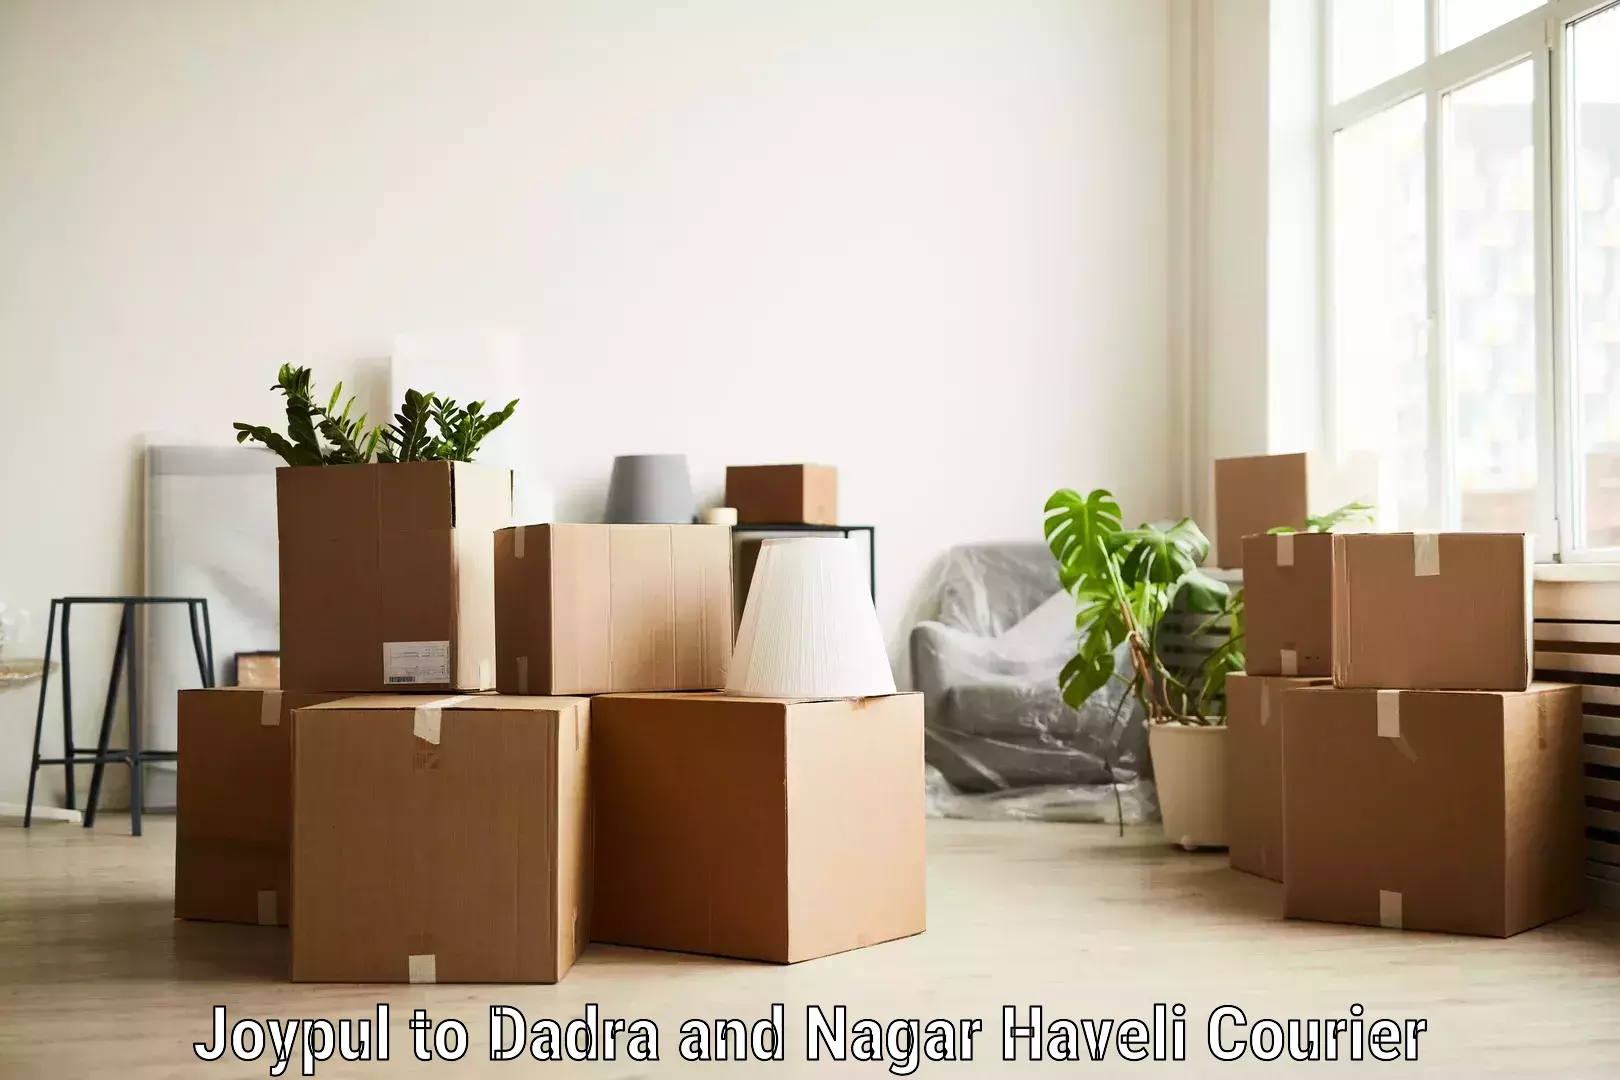 Courier service innovation Joypul to Dadra and Nagar Haveli